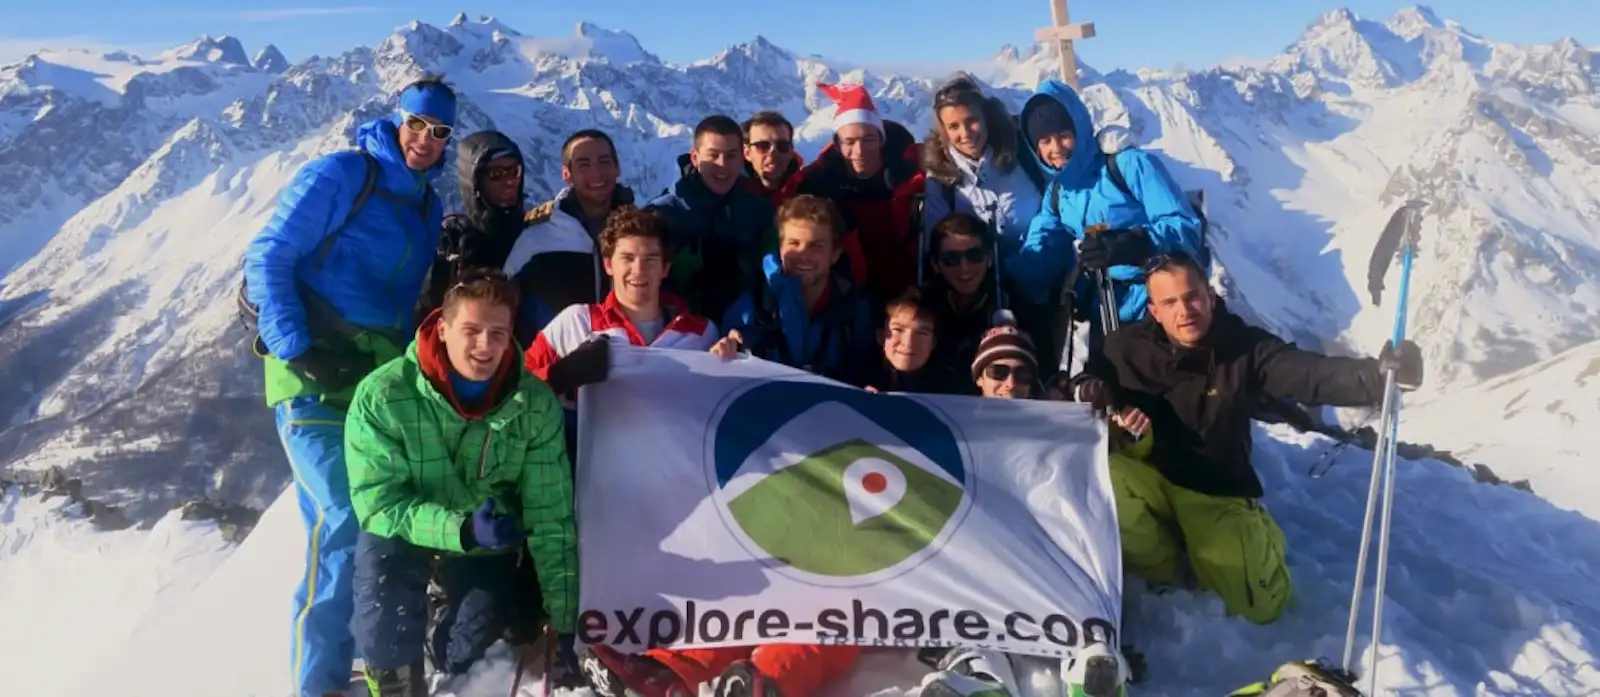 Kap Azimut ski trip to La Grave, a dream come true post image